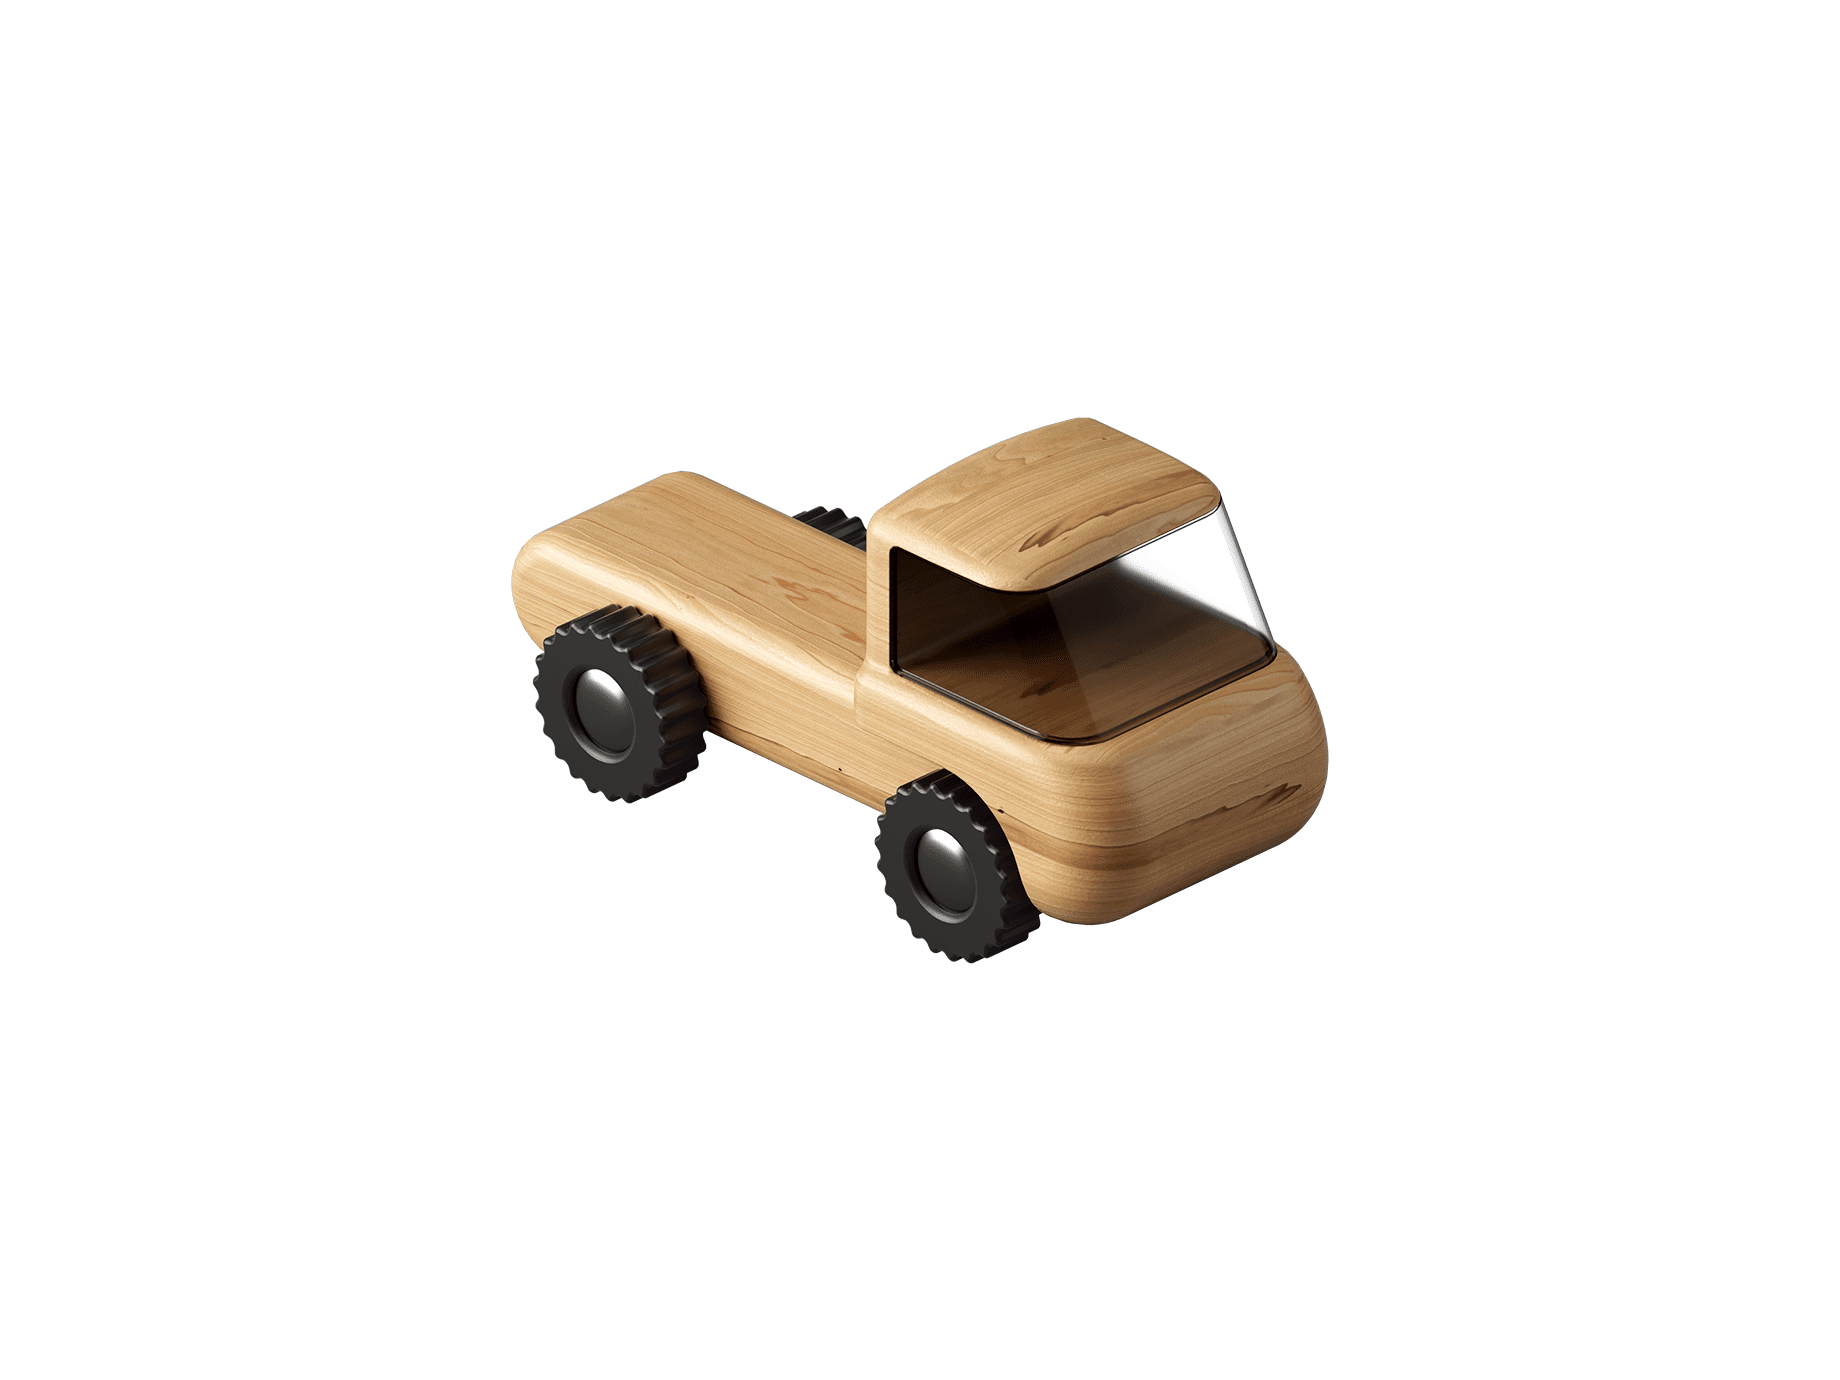 wooden-toys-full-51-items